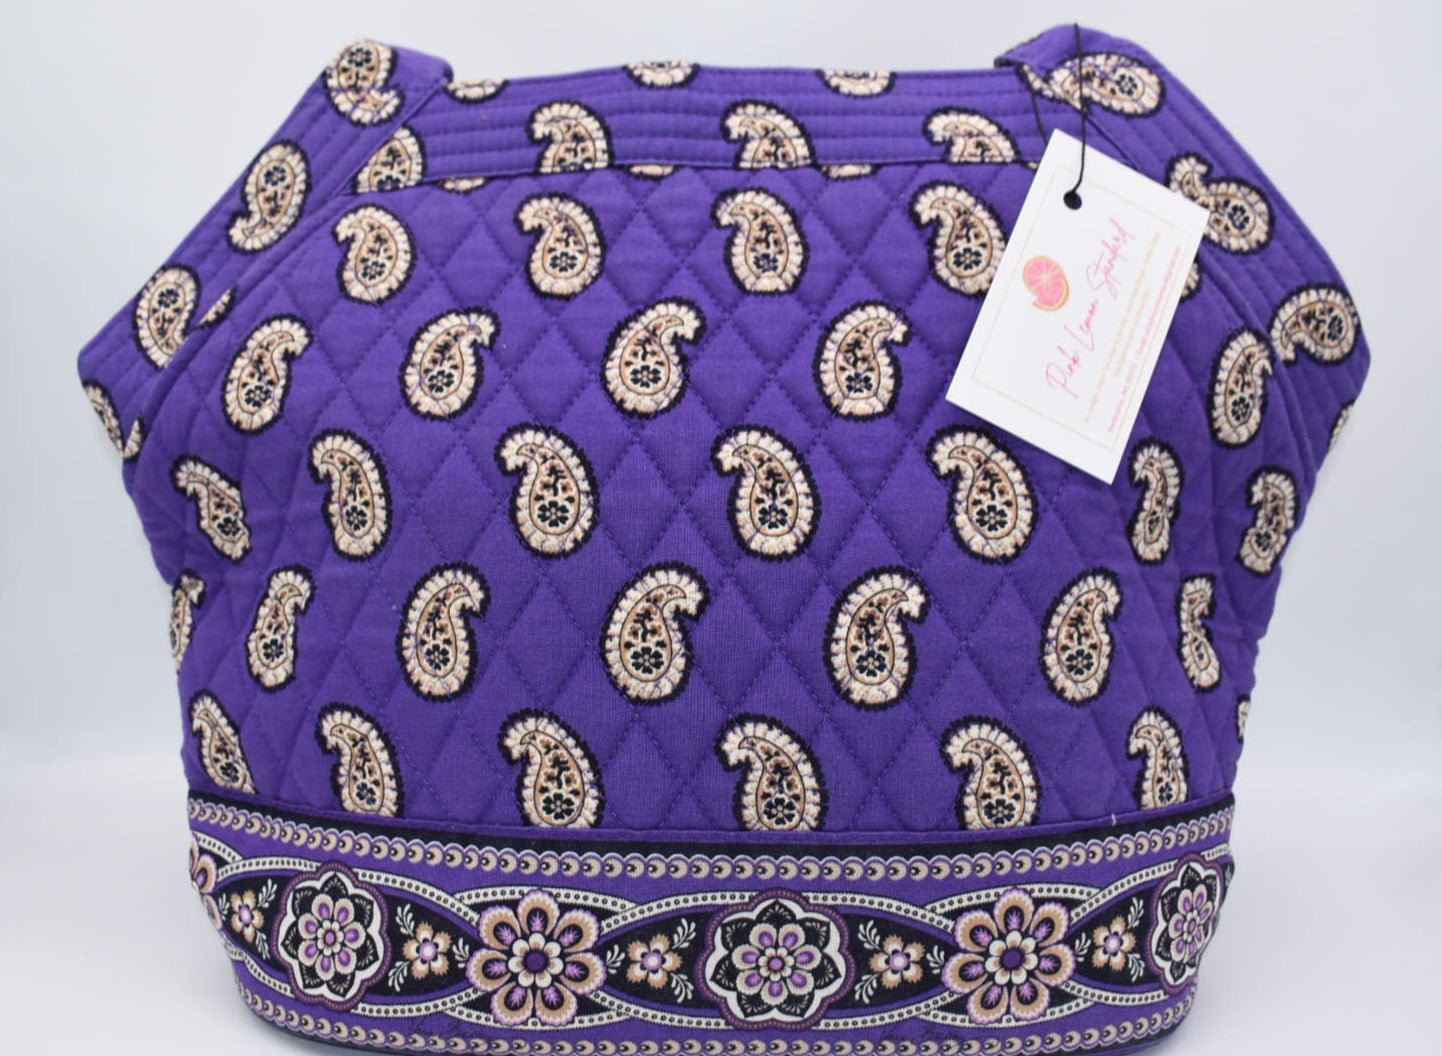 Vera Bradley Angle Tote Bag in "Simply Violet" Pattern